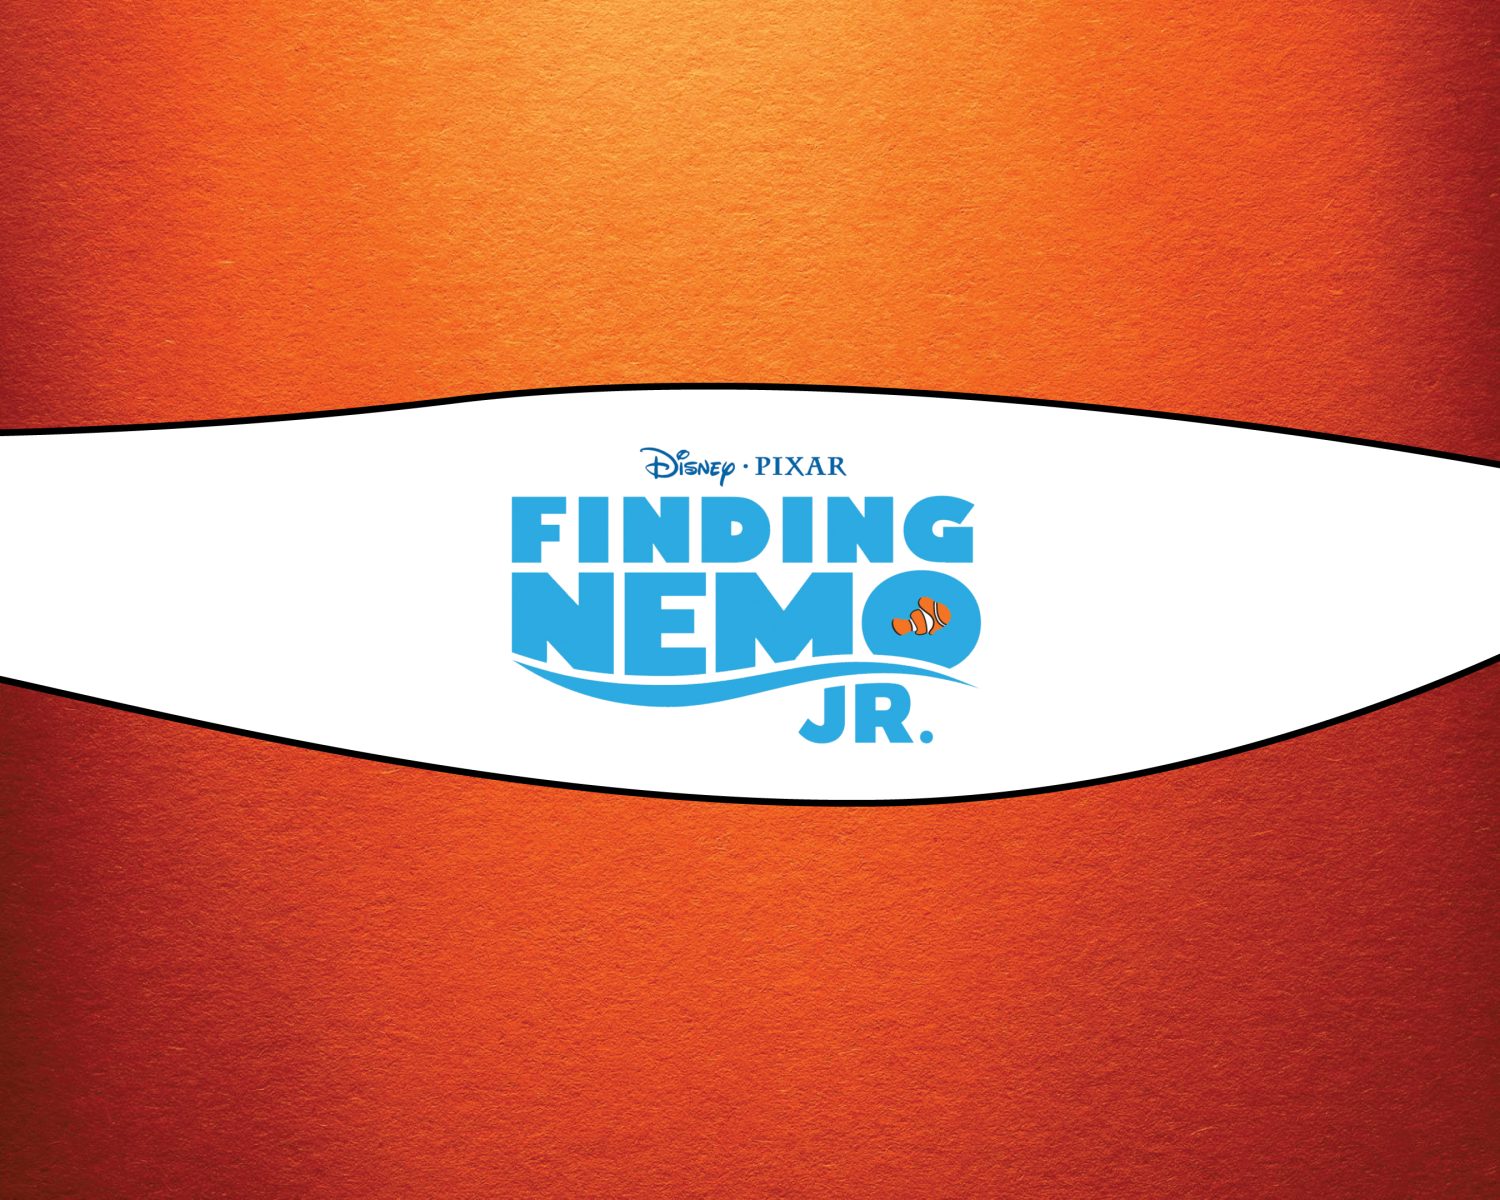 Disney’s Finding Nemo Jr